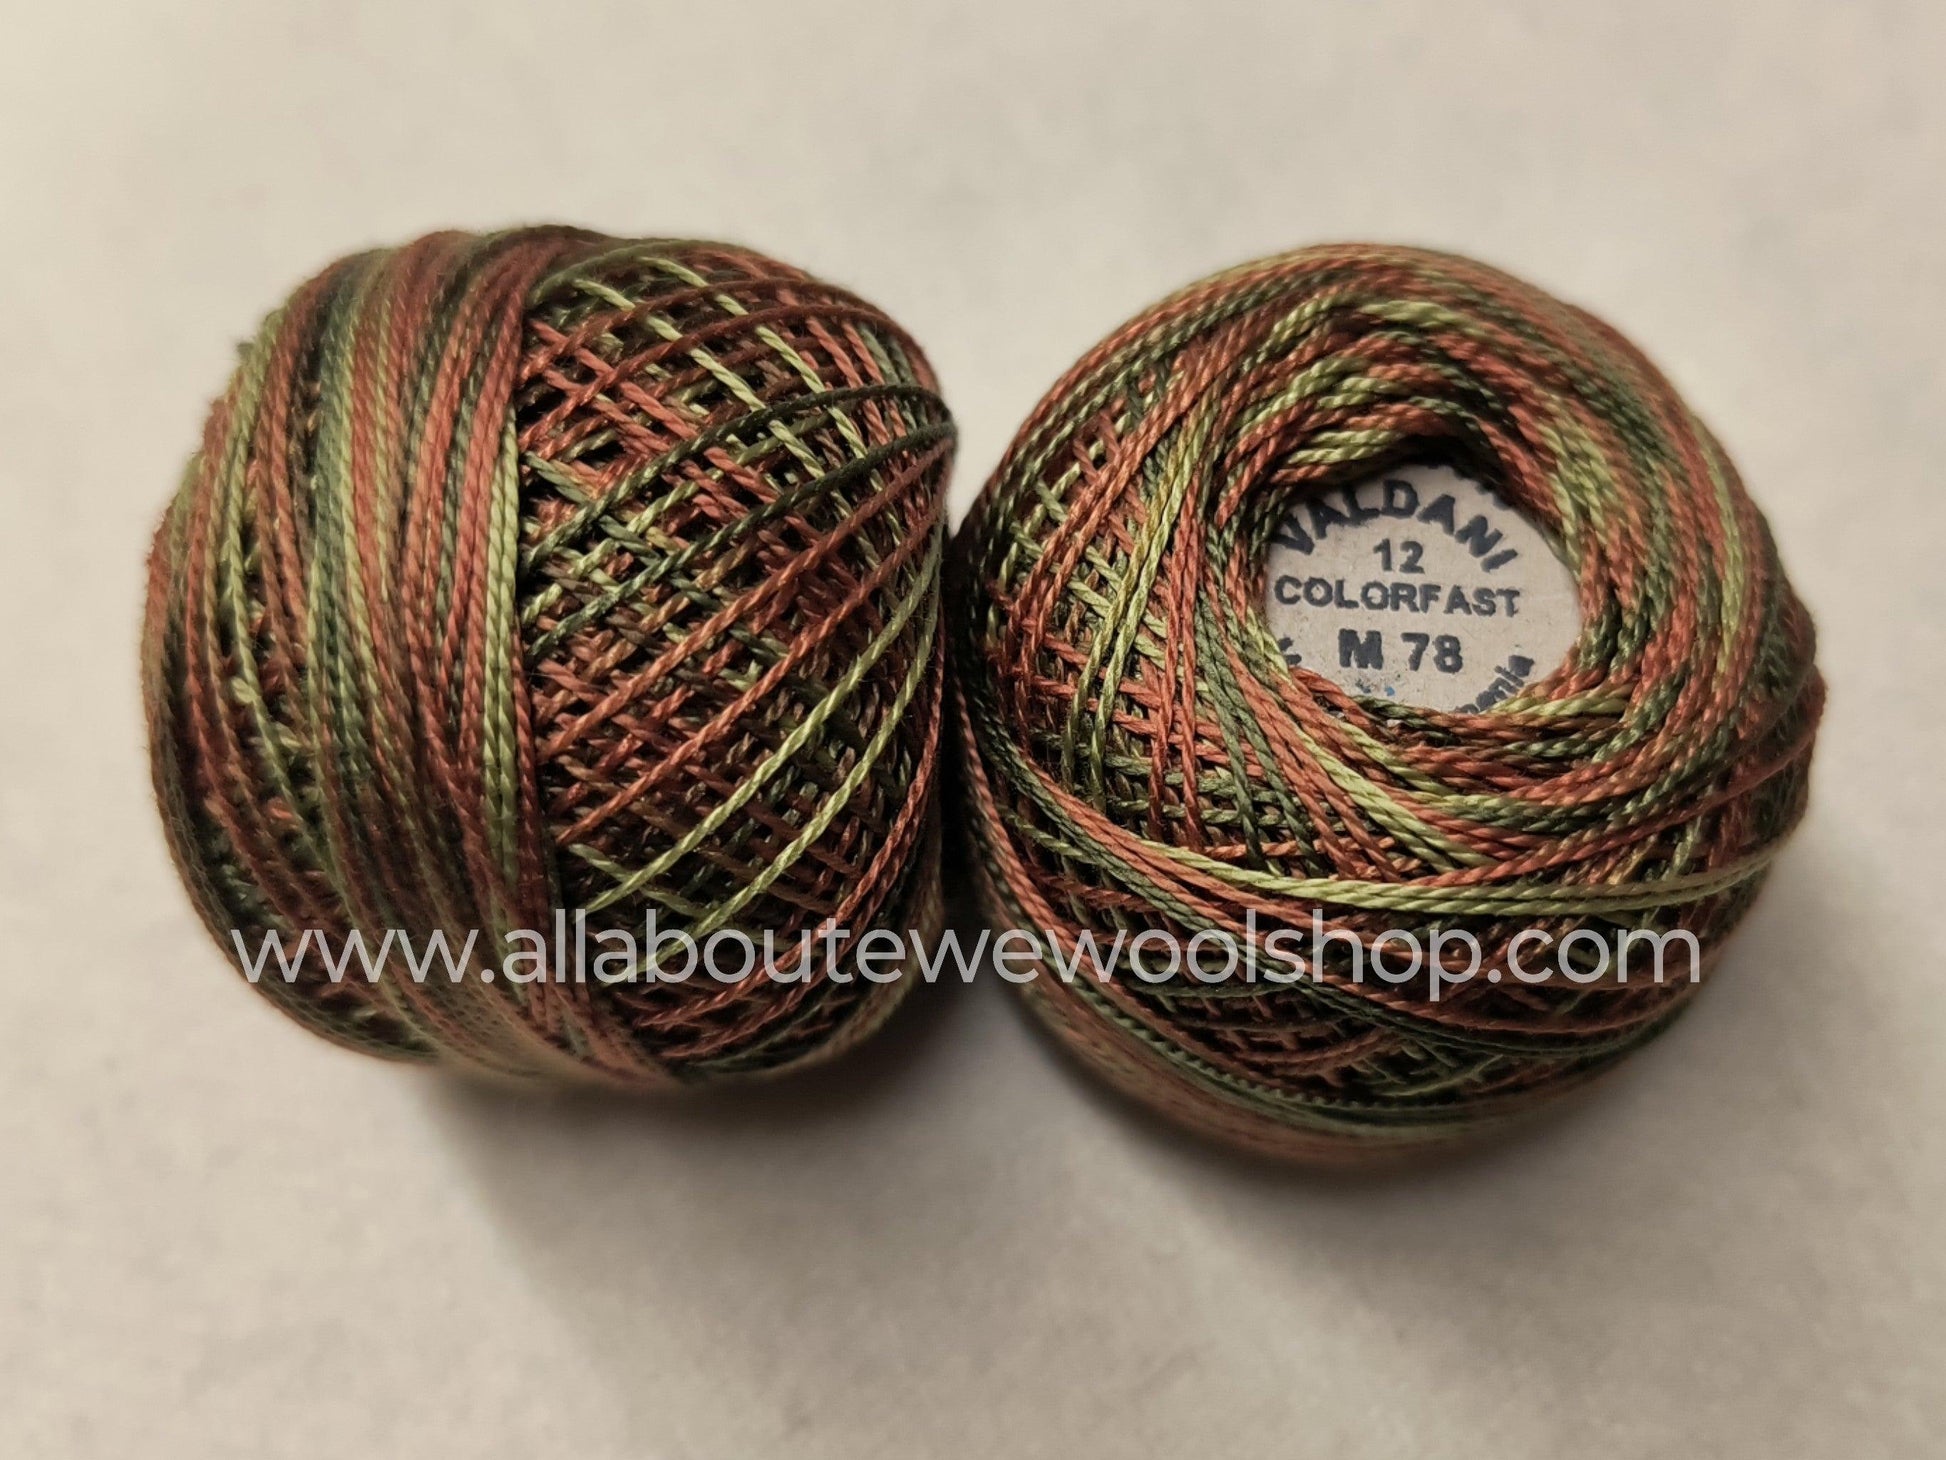 M78 #12 Valdani Pearl/Perle Cotton Thread - All About Ewe Wool Shop